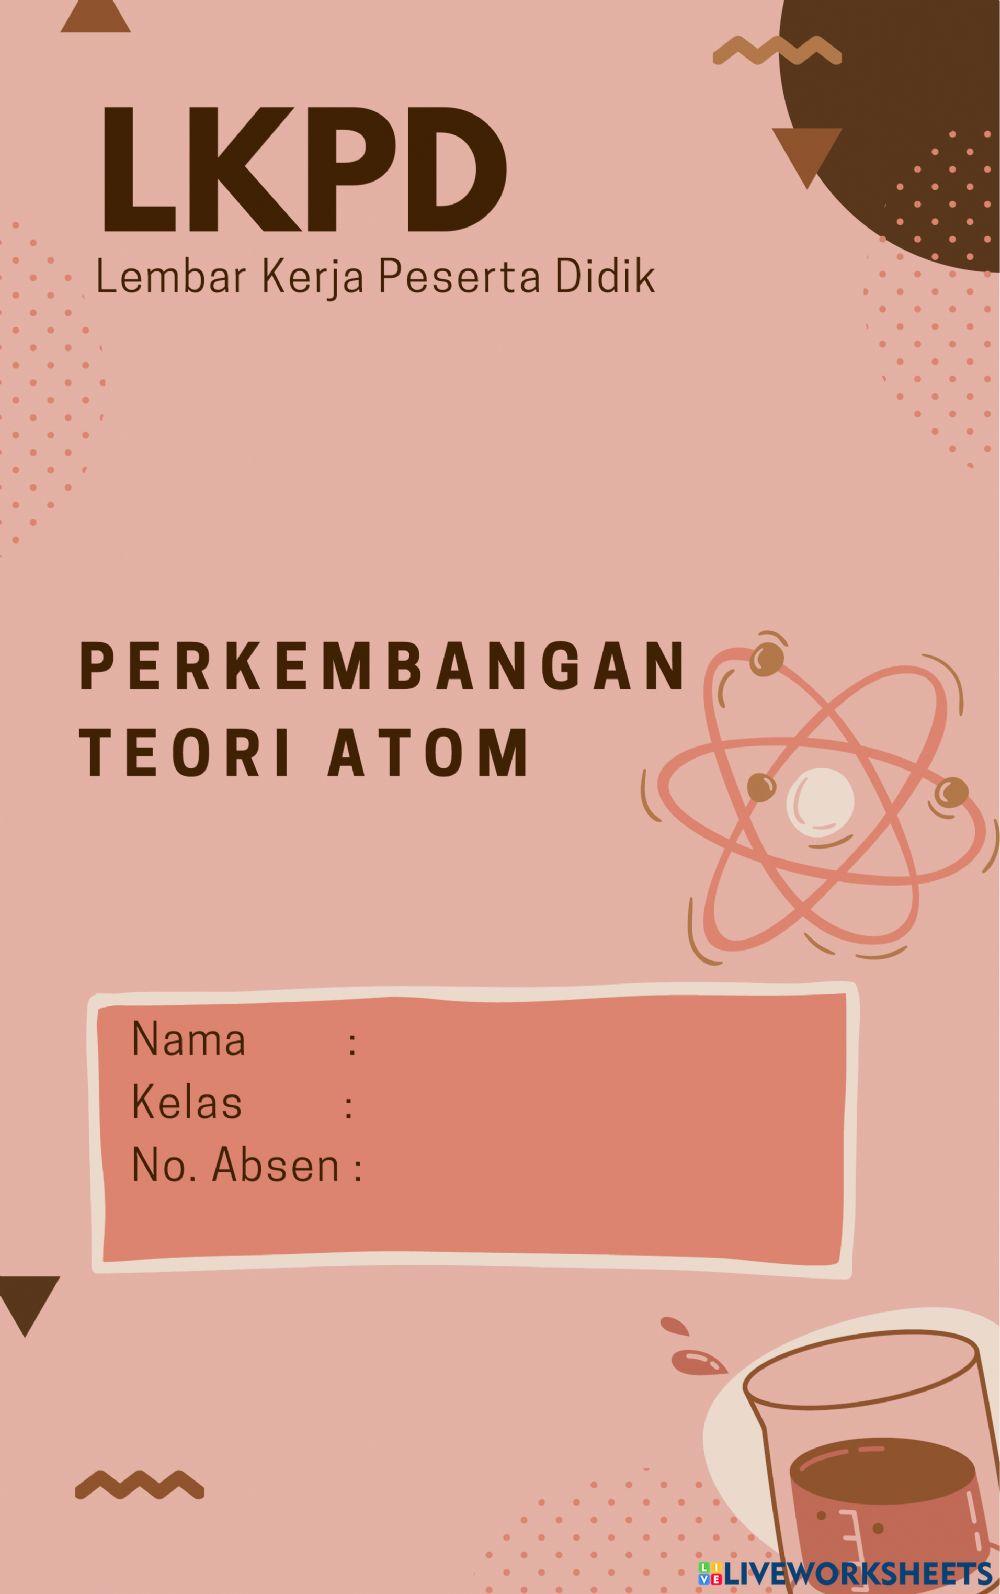 Perkembangan teori atom